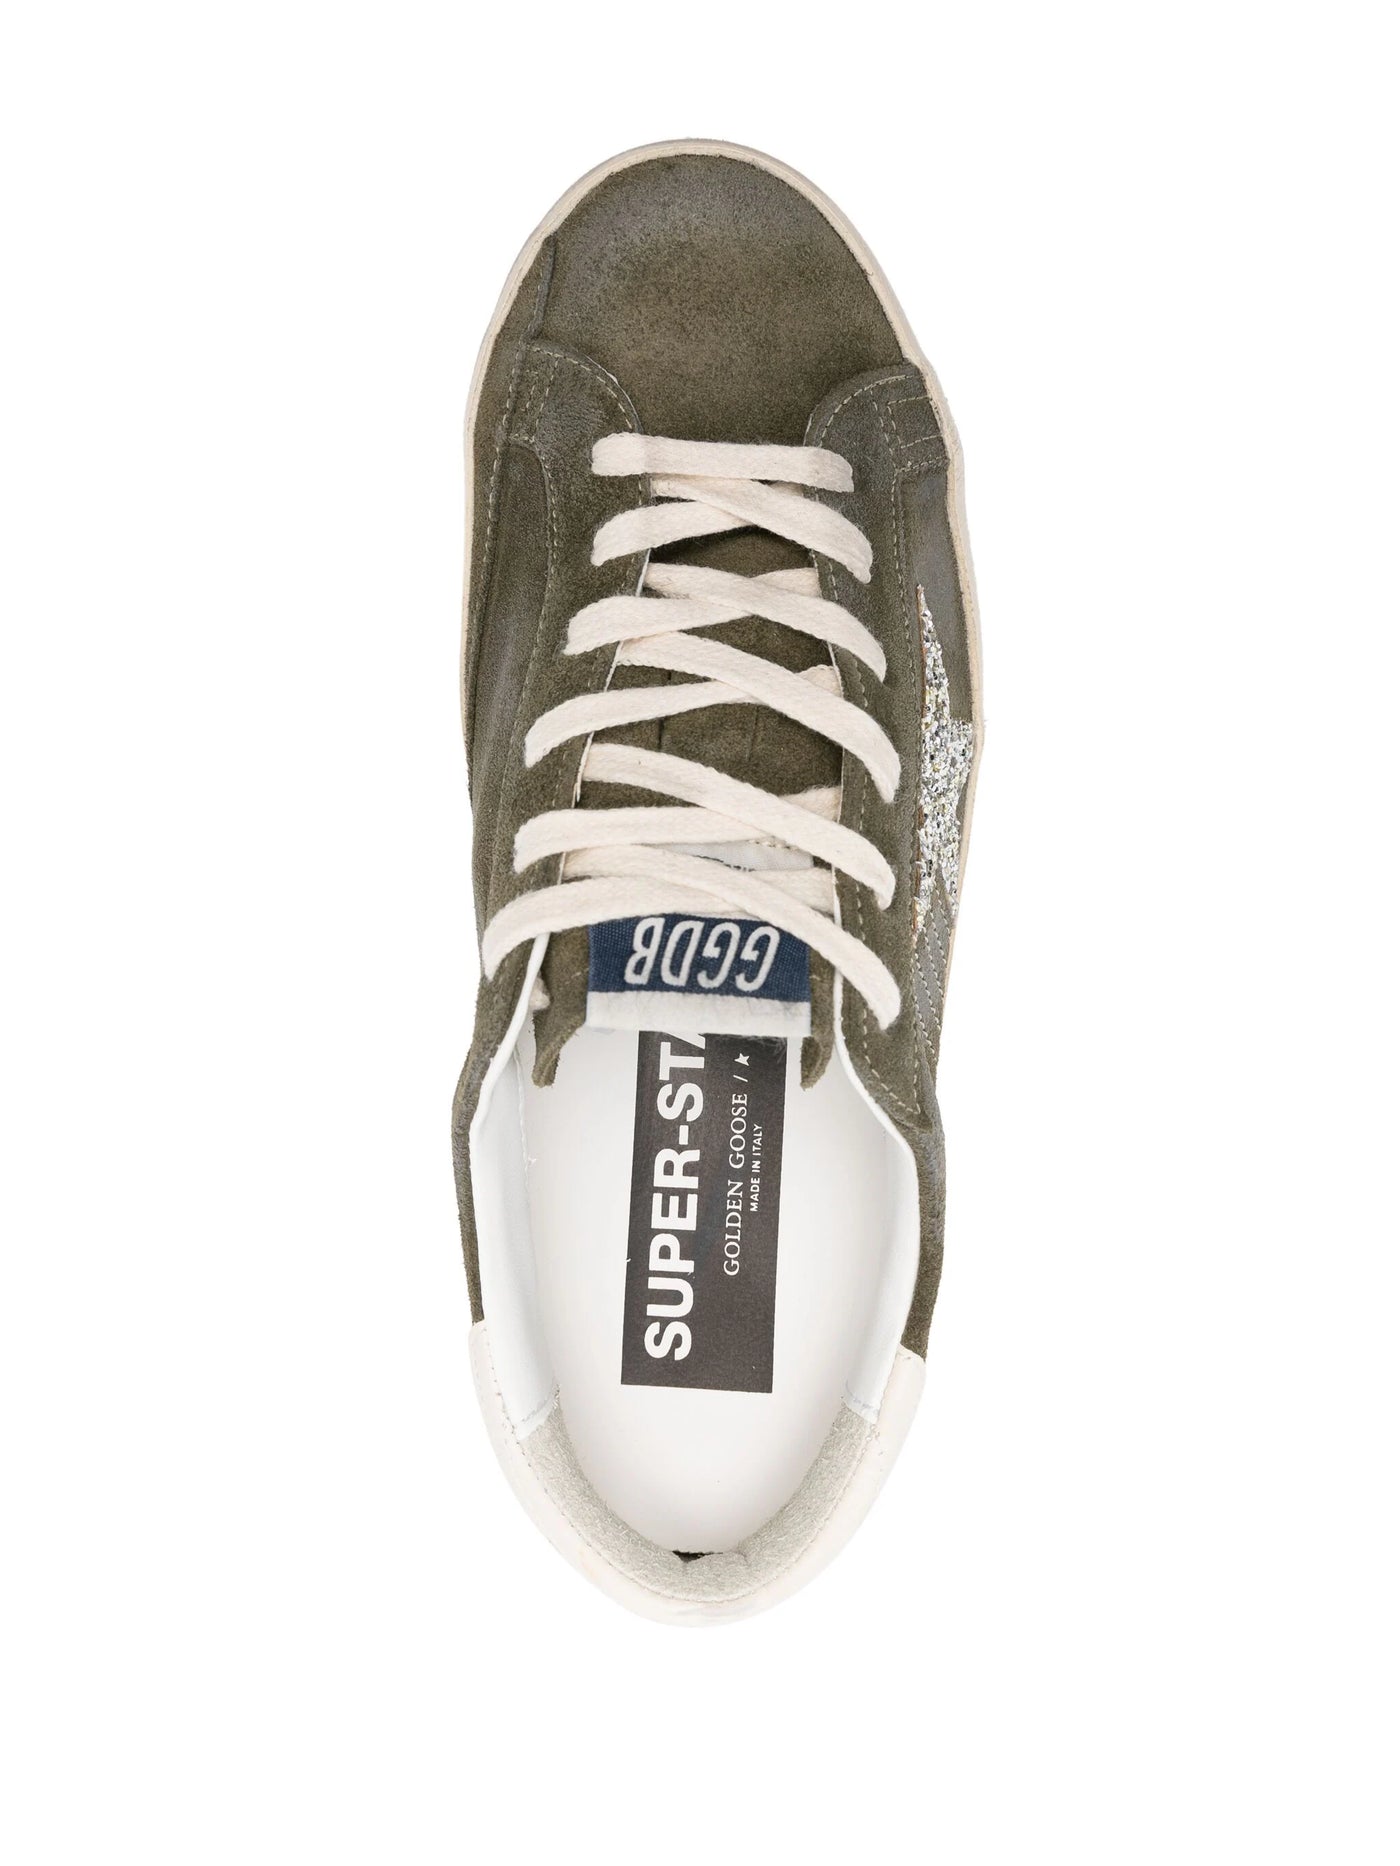 Superstar Sneaker - Olive/Khaki/Silver